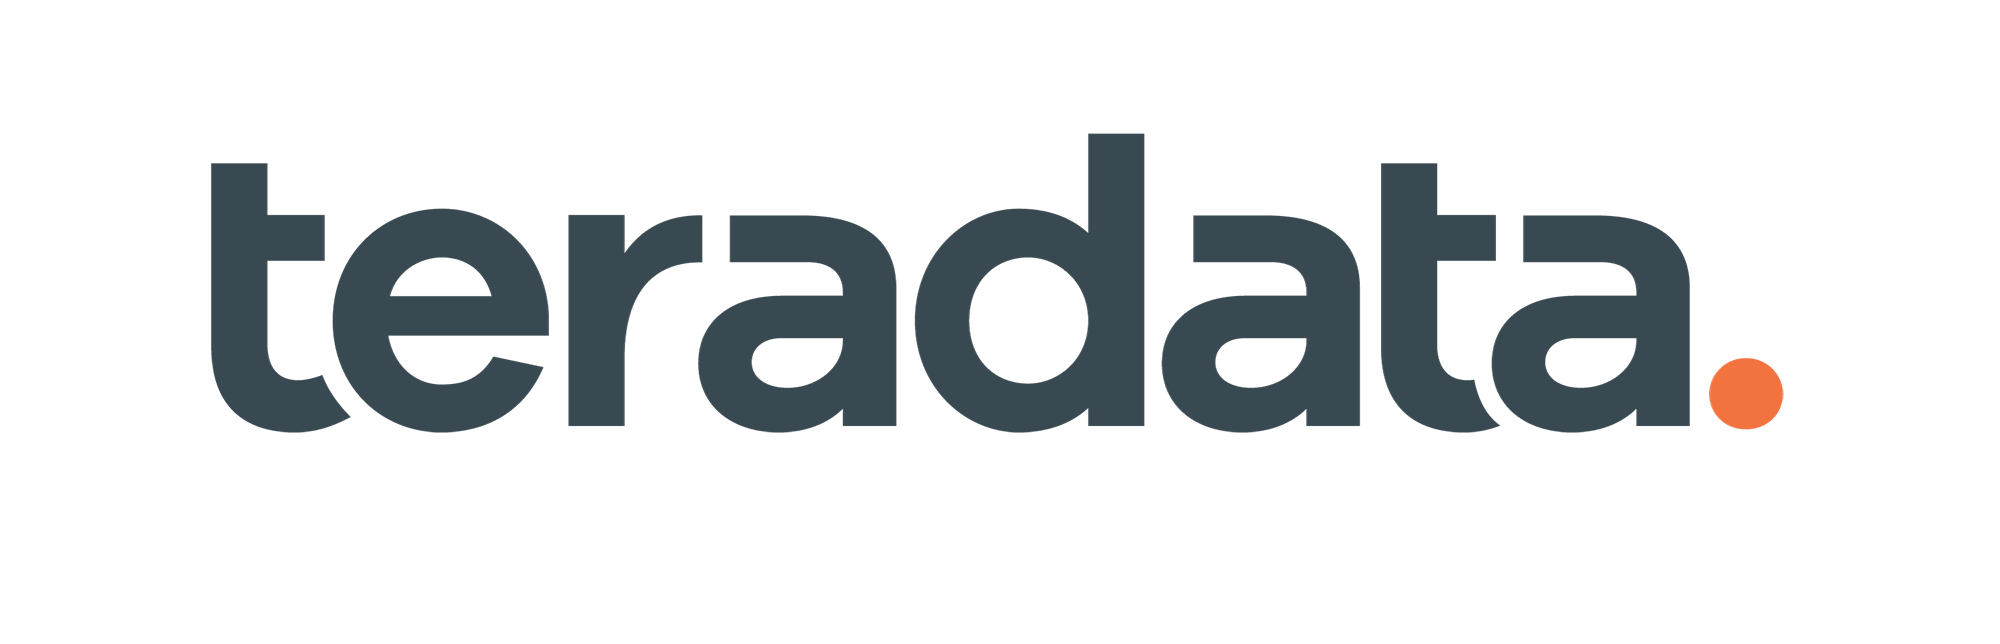 teradata_full_logo